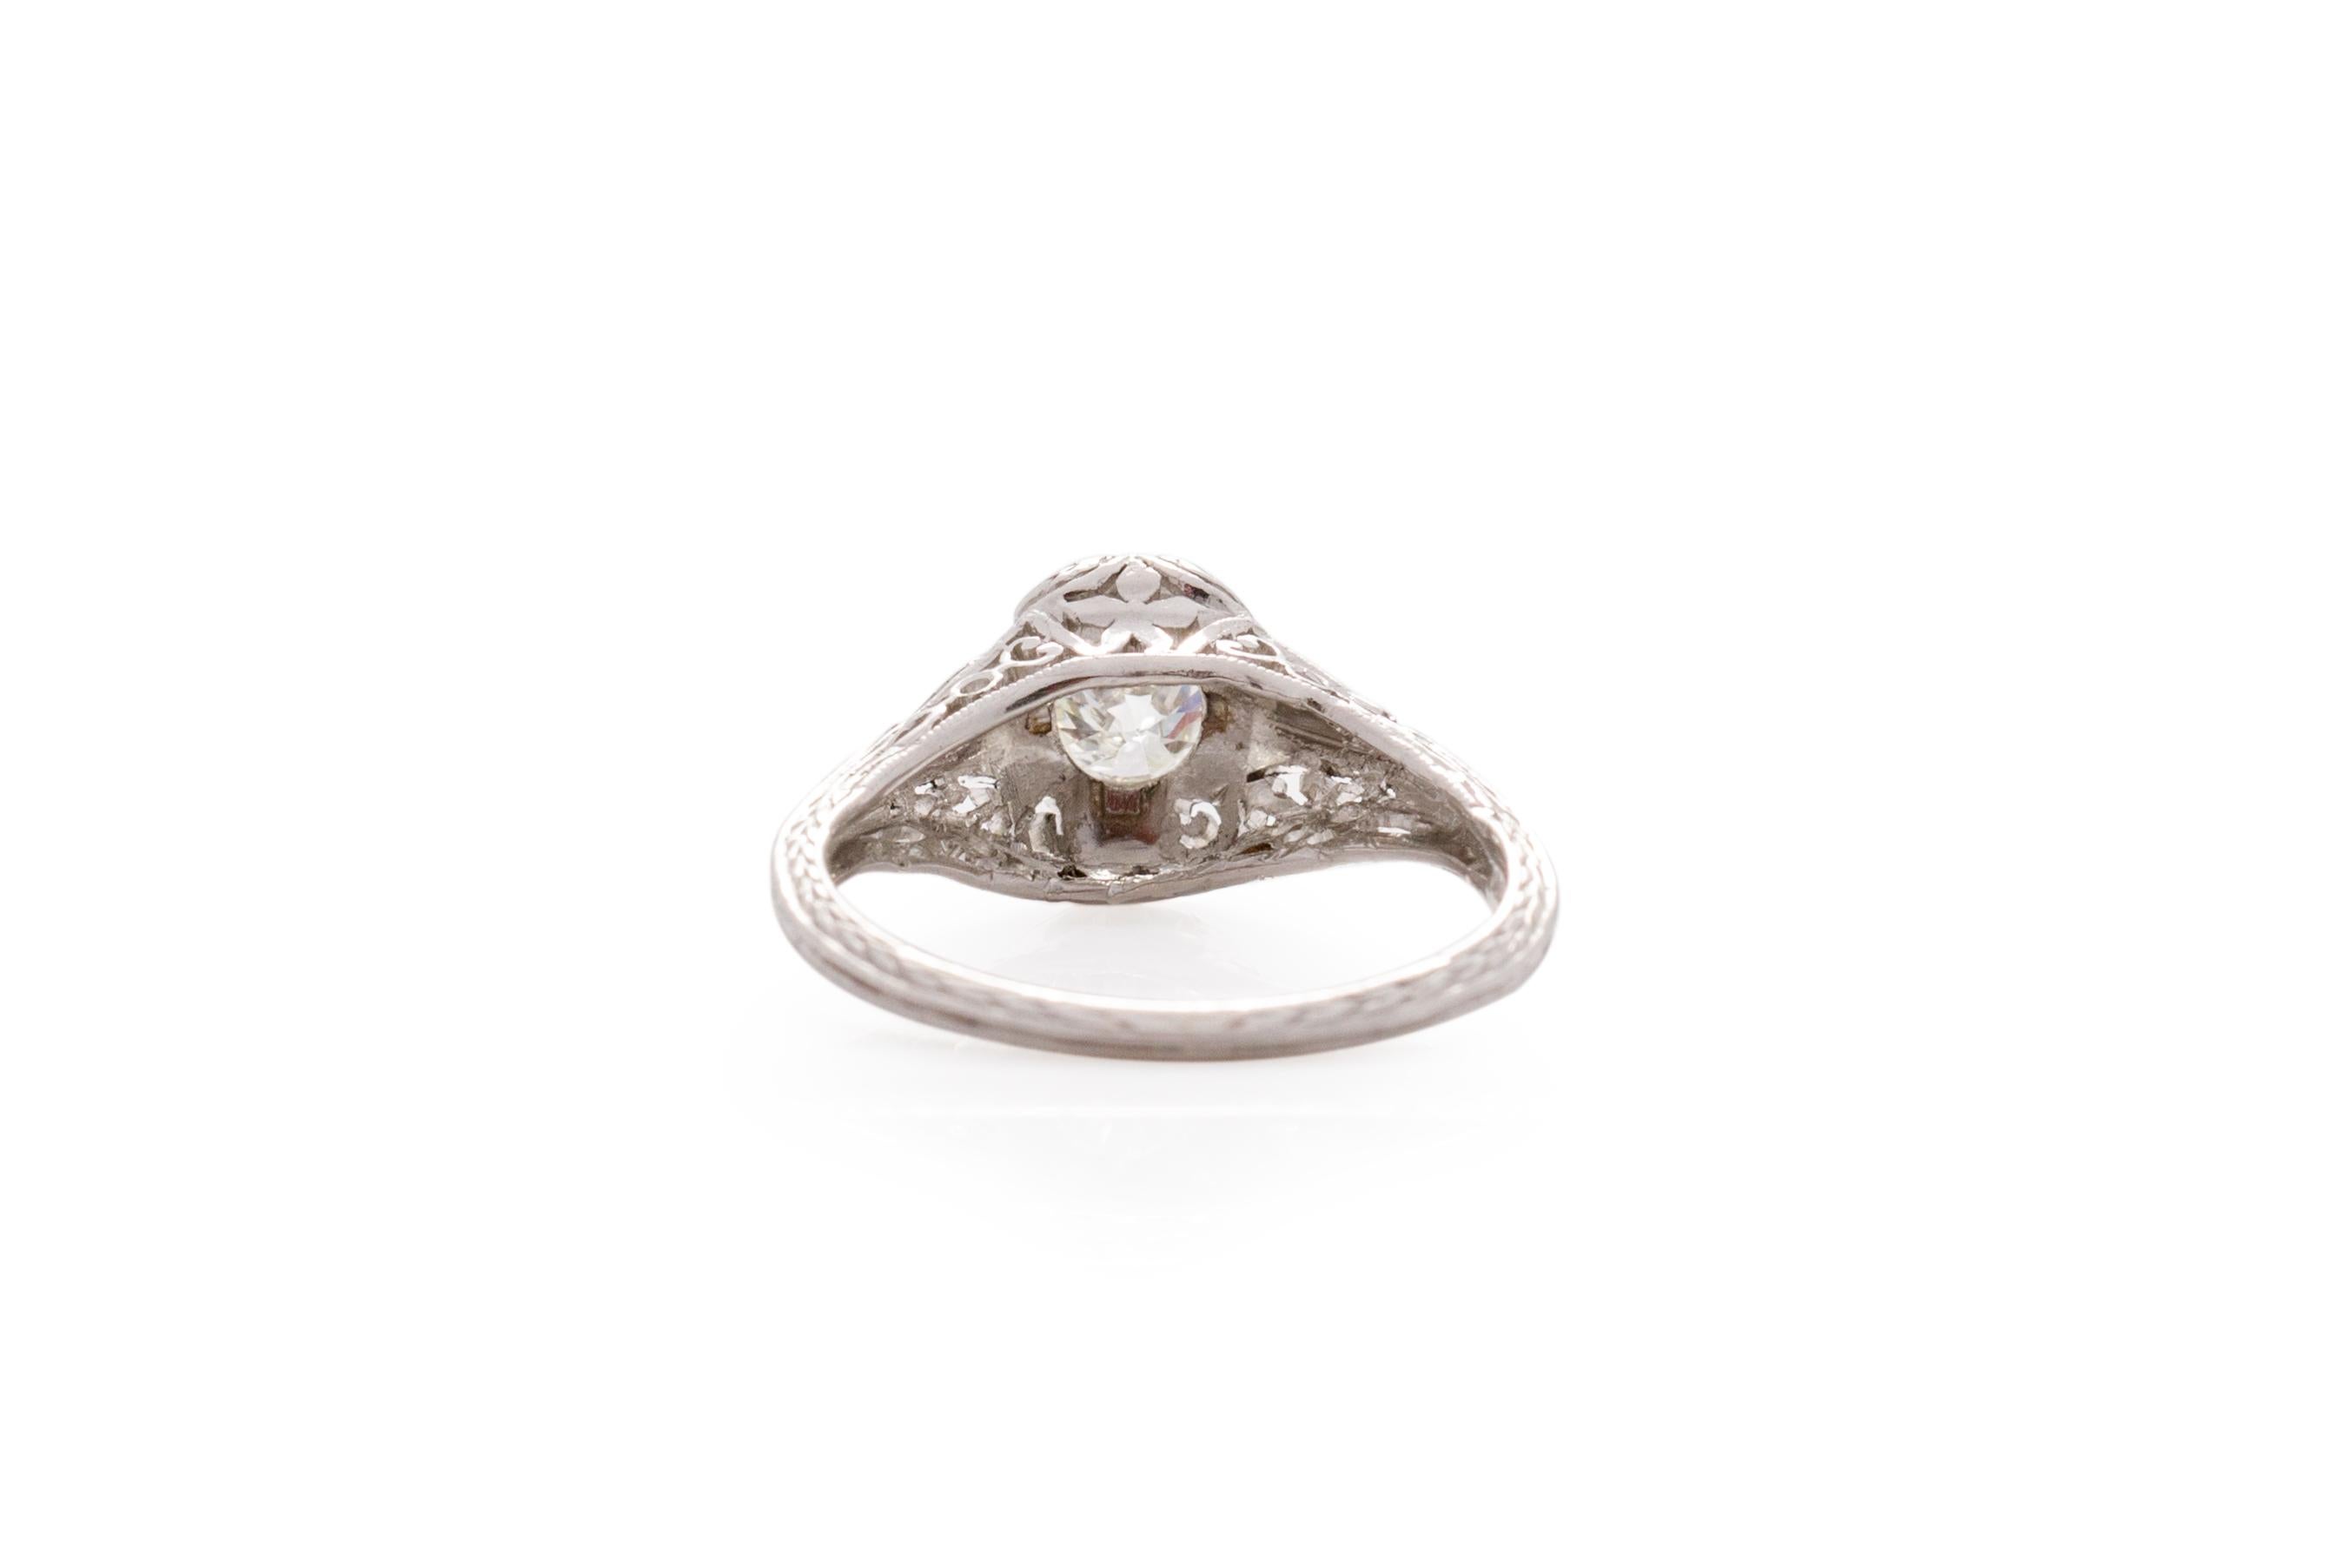 35 carat diamond ring